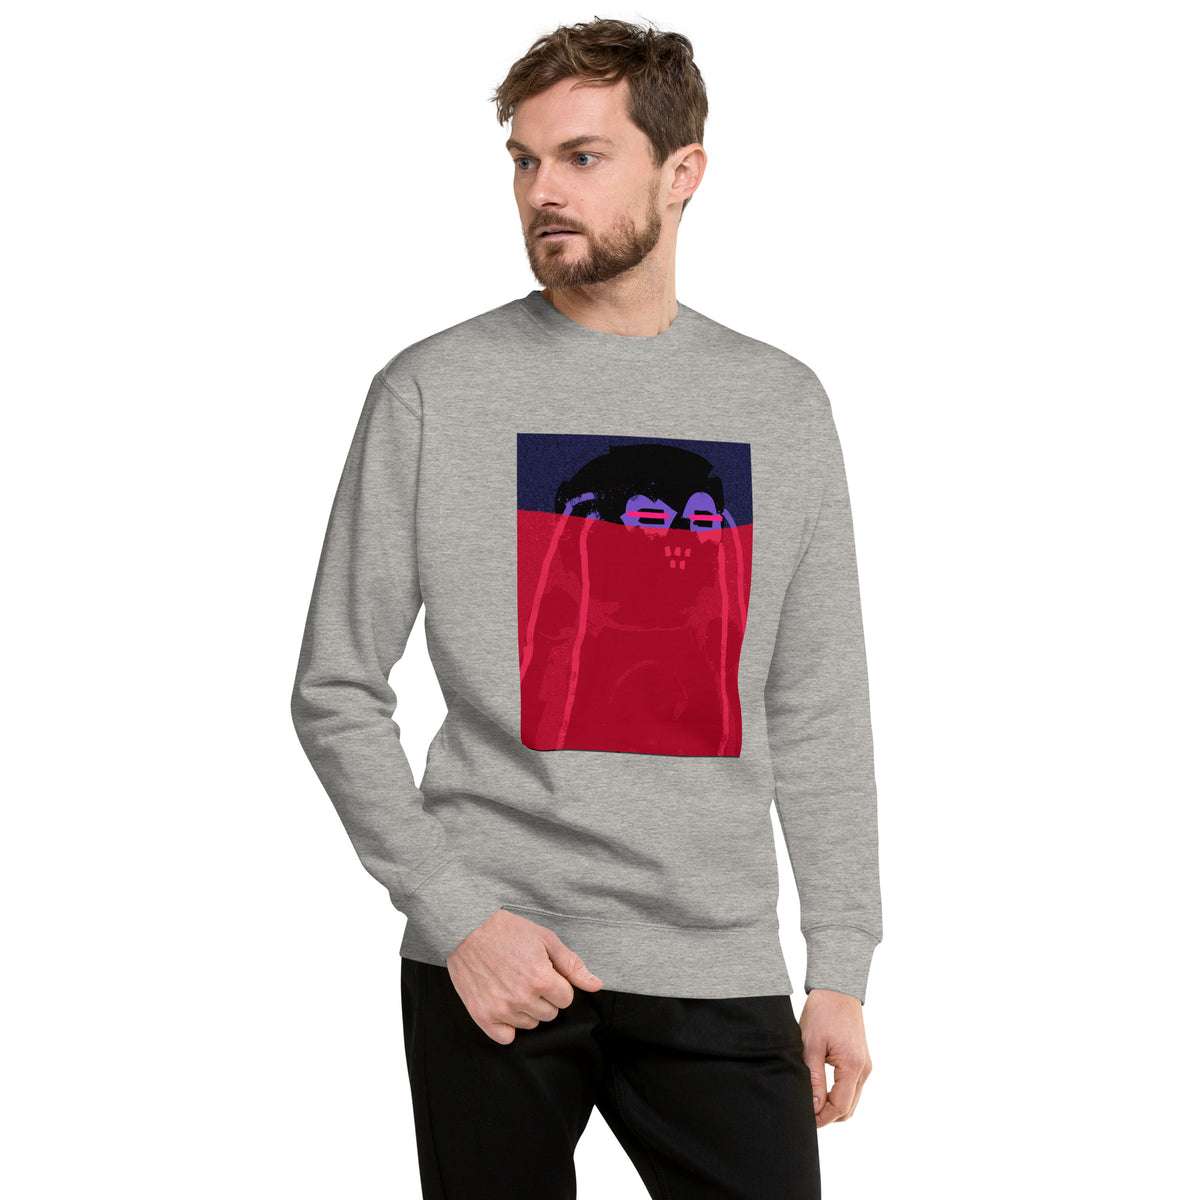 Reachback by XCOPY | Unisex Premium Sweatshirt